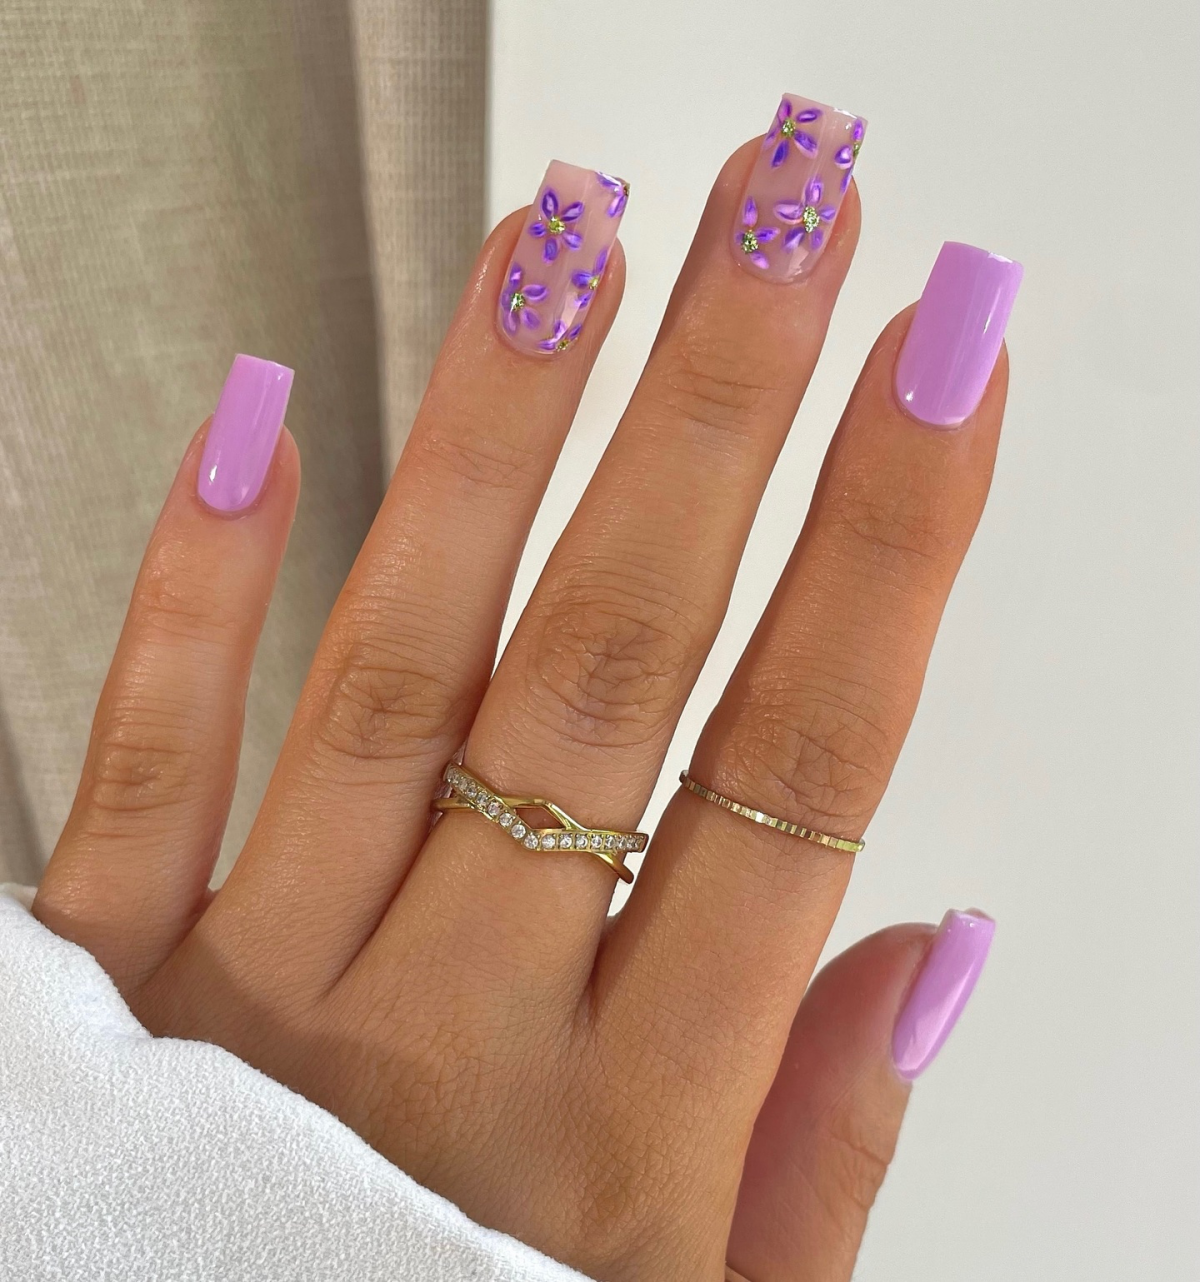 magnolia nails with purple